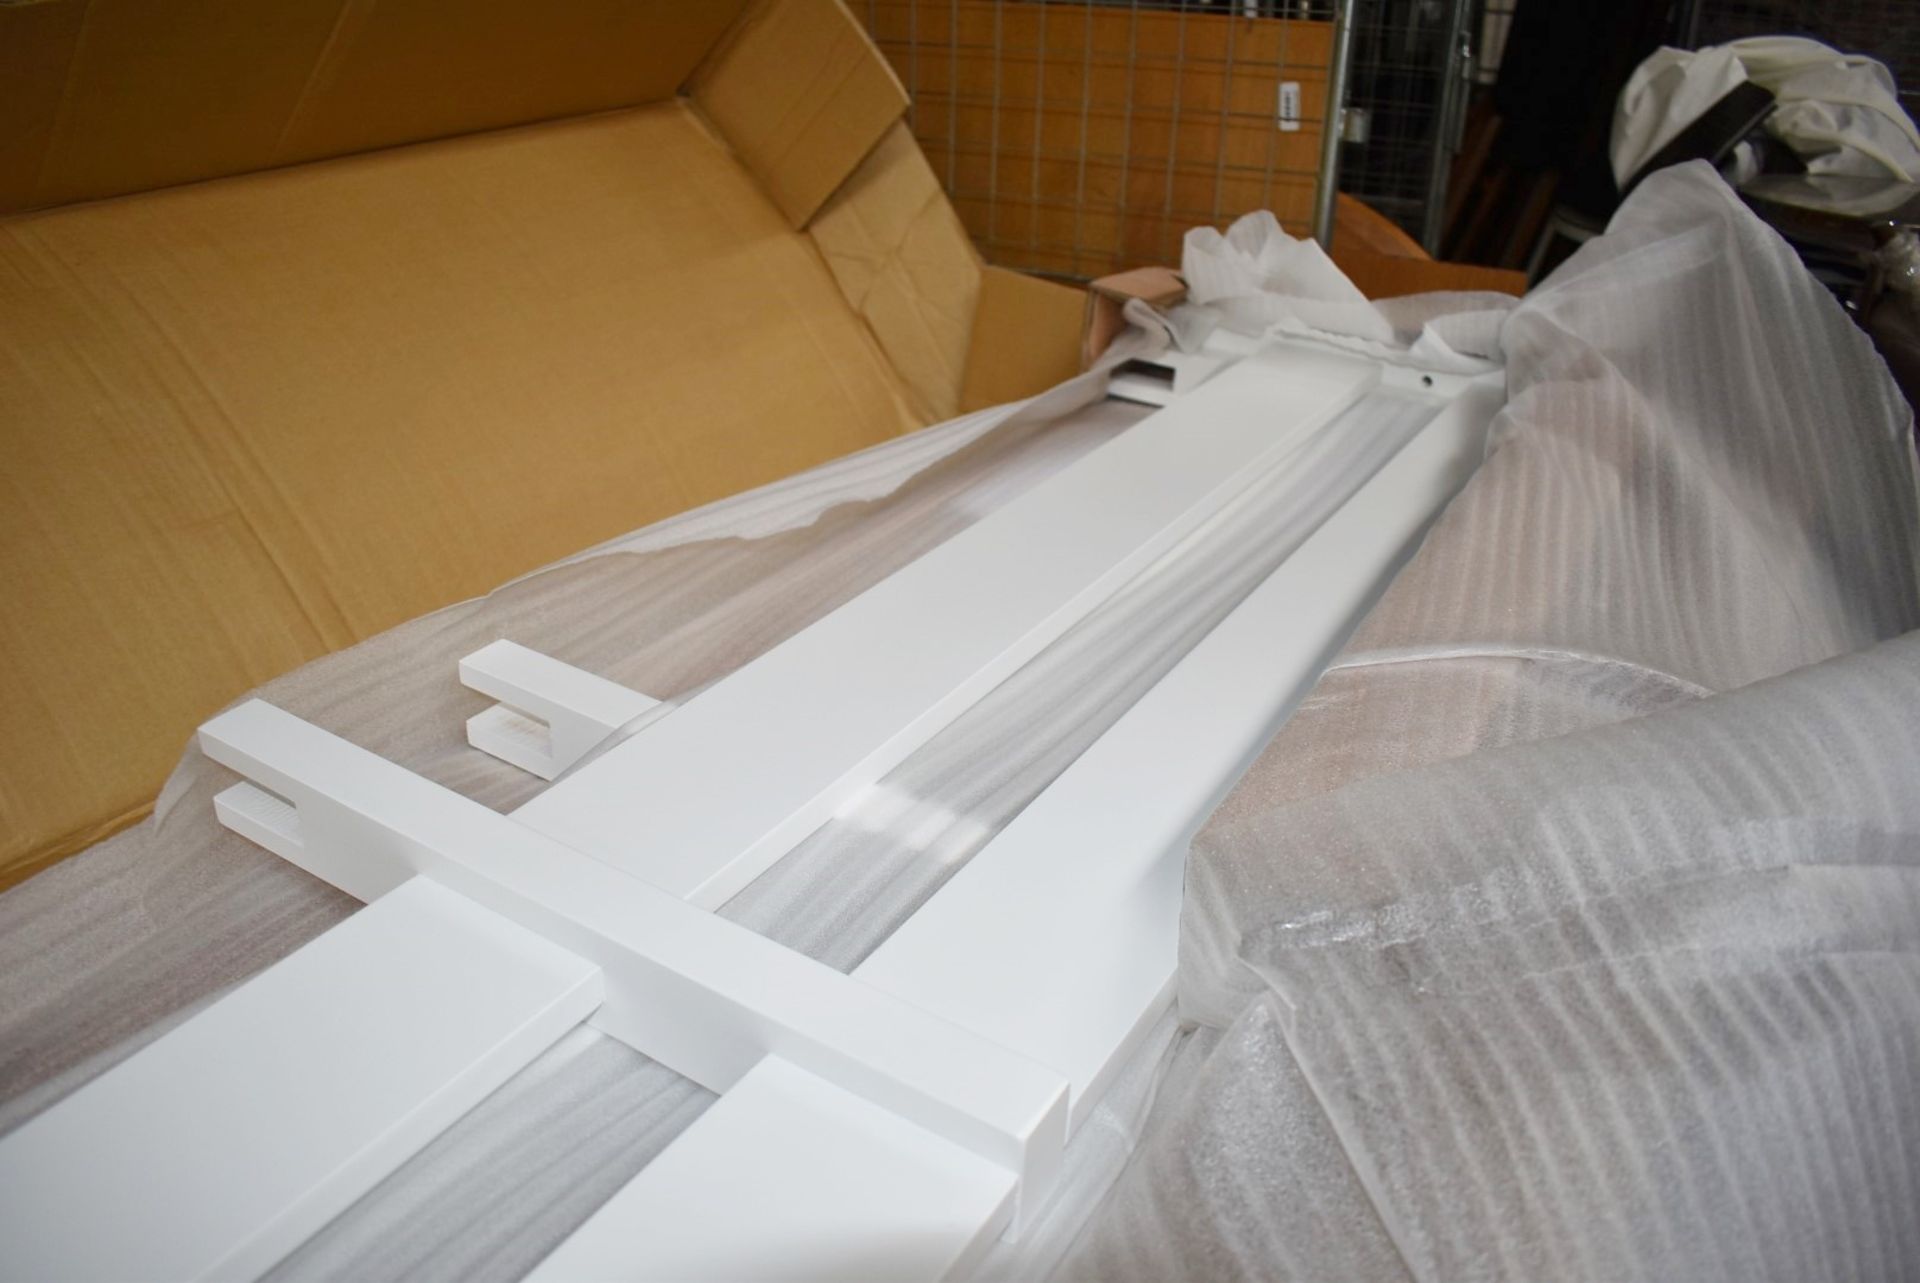 1 x Lea Getaway Childrens Bunk Bed in White - Unused in Original Packaging - Can Be Used as Bunkbeds - Image 5 of 13